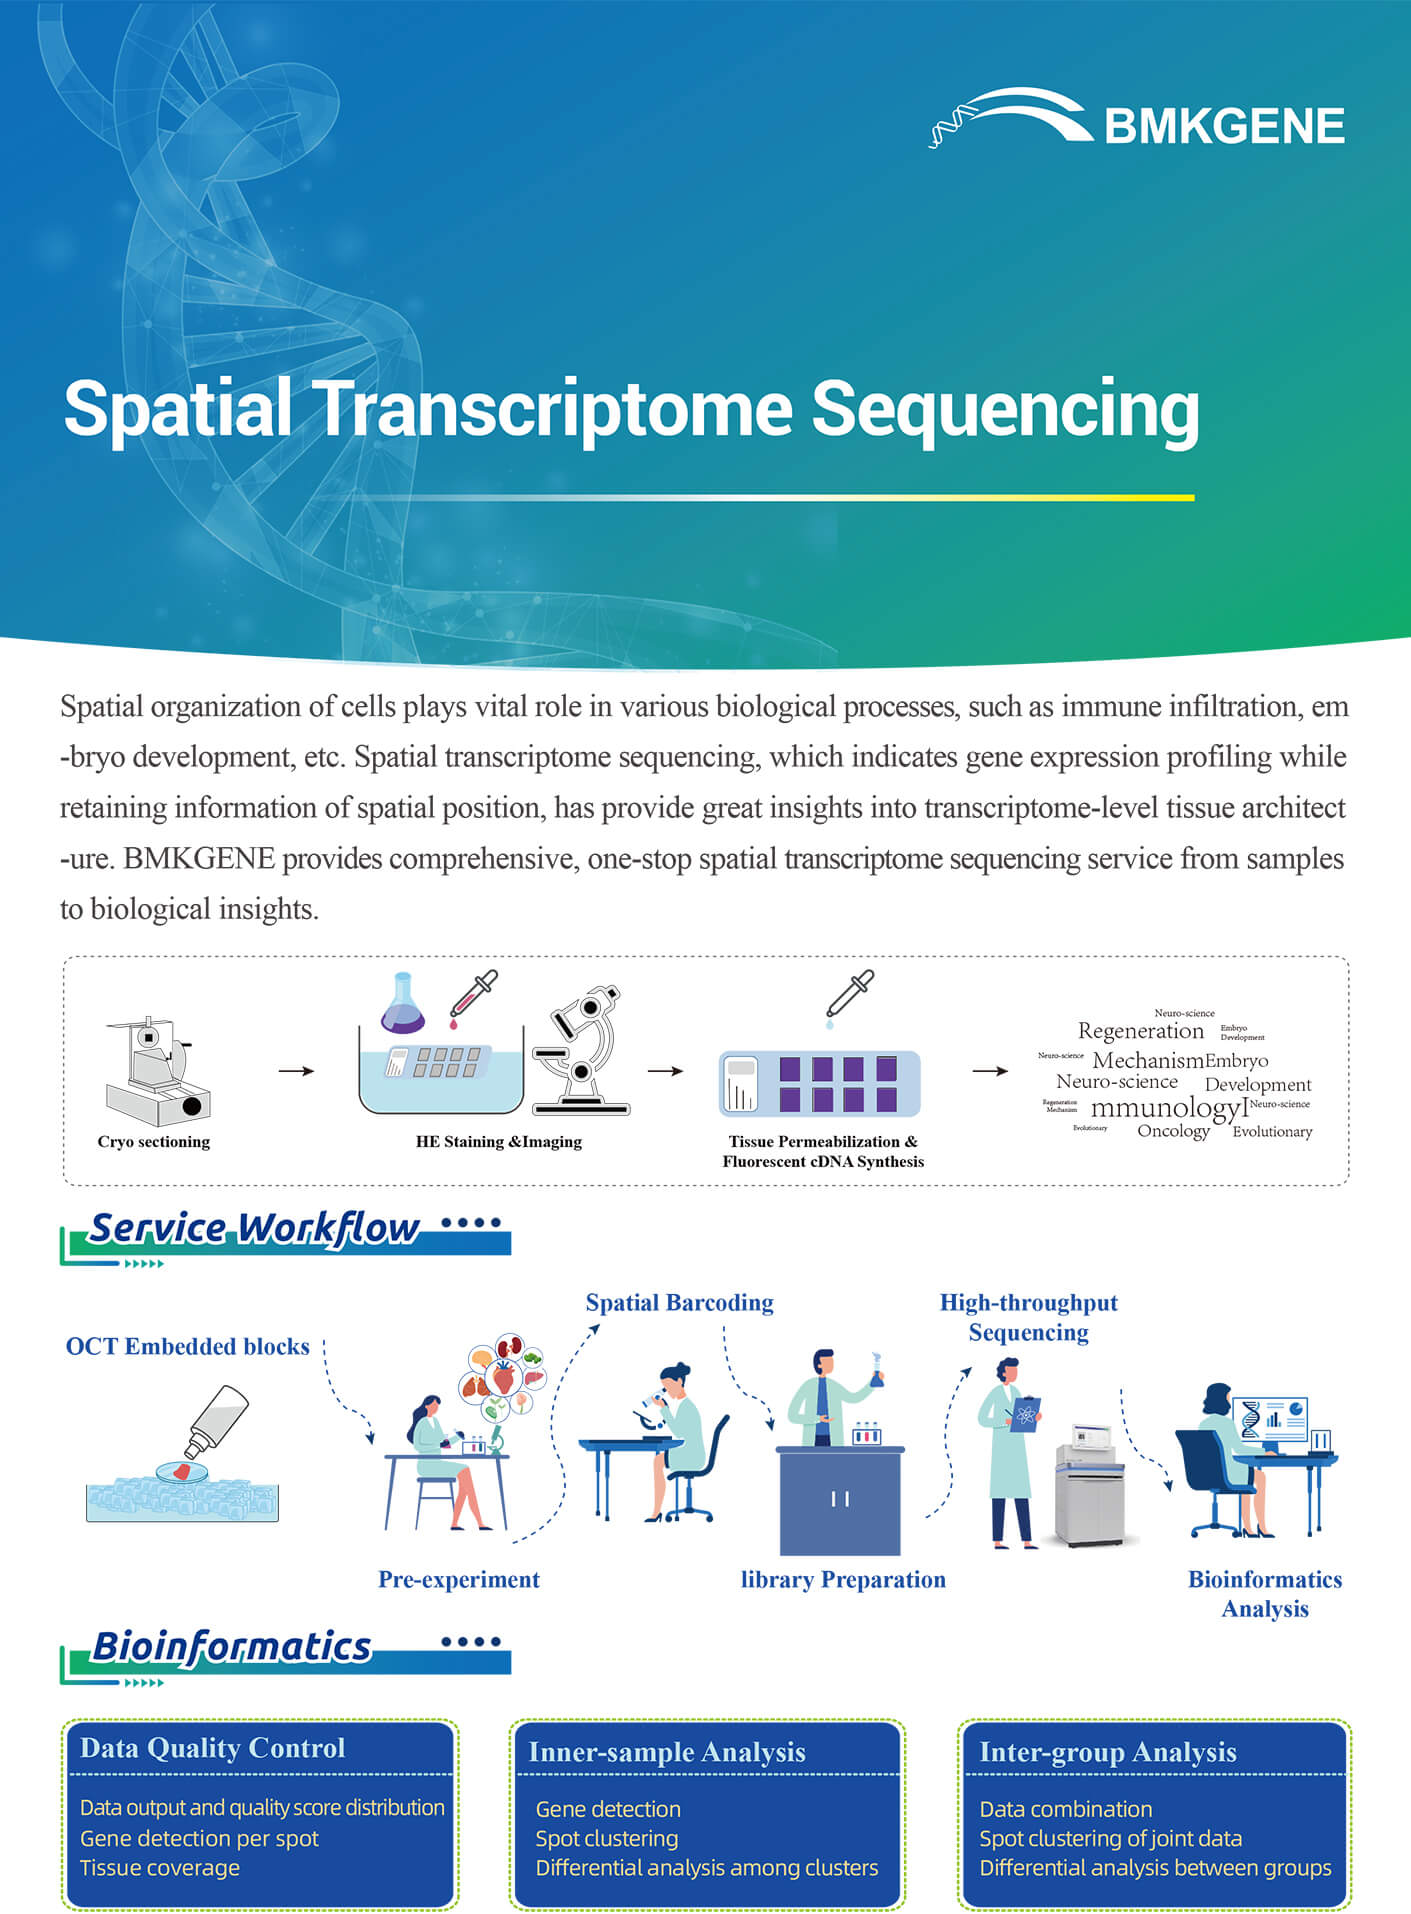 https://www.bmkgene.com/uploads/Spatial-Transcriptome-Sequences-10X-BMKGENE-2311.pdf